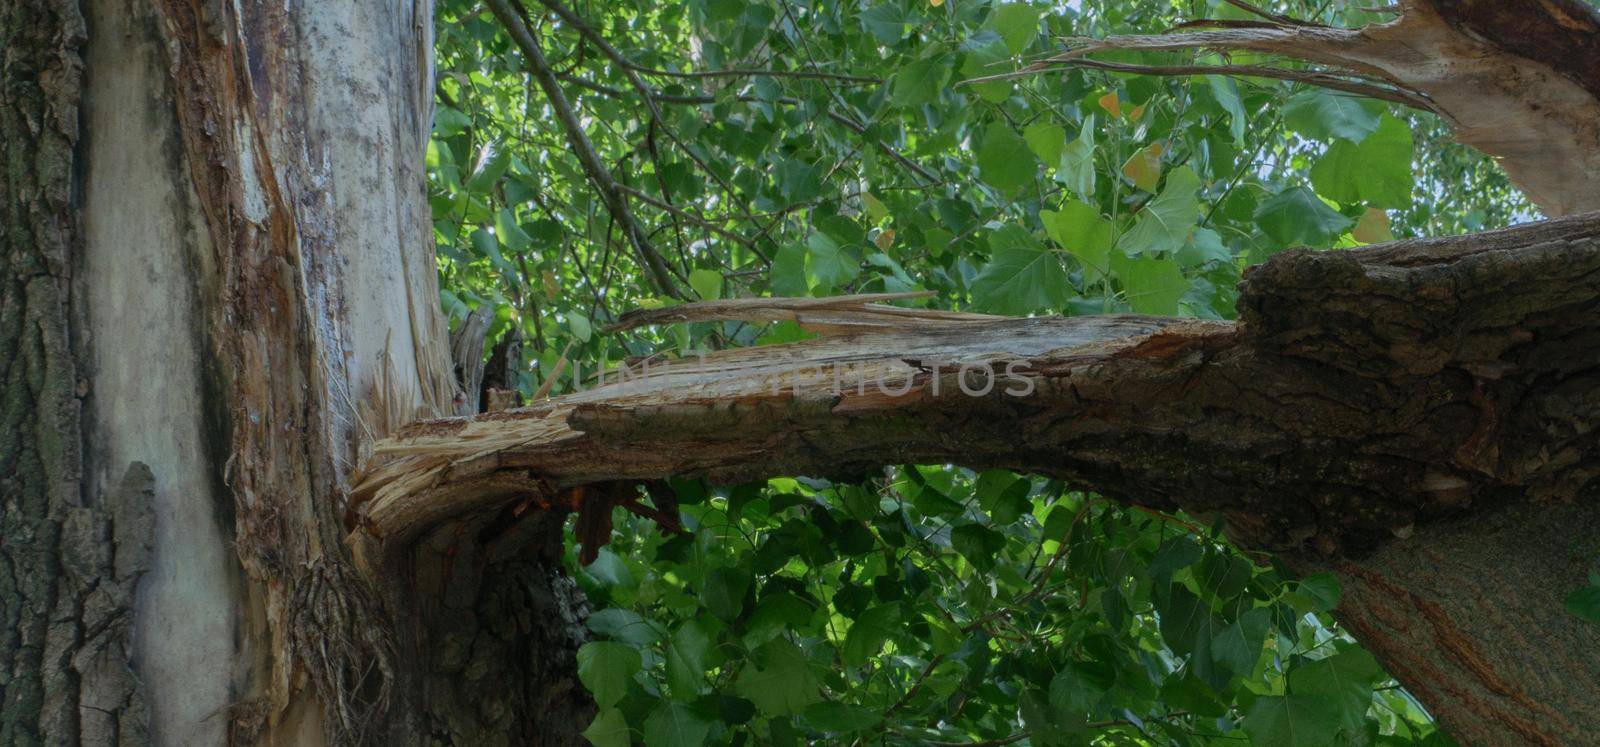 Broken tree trunk after a hurricane. by gelog67